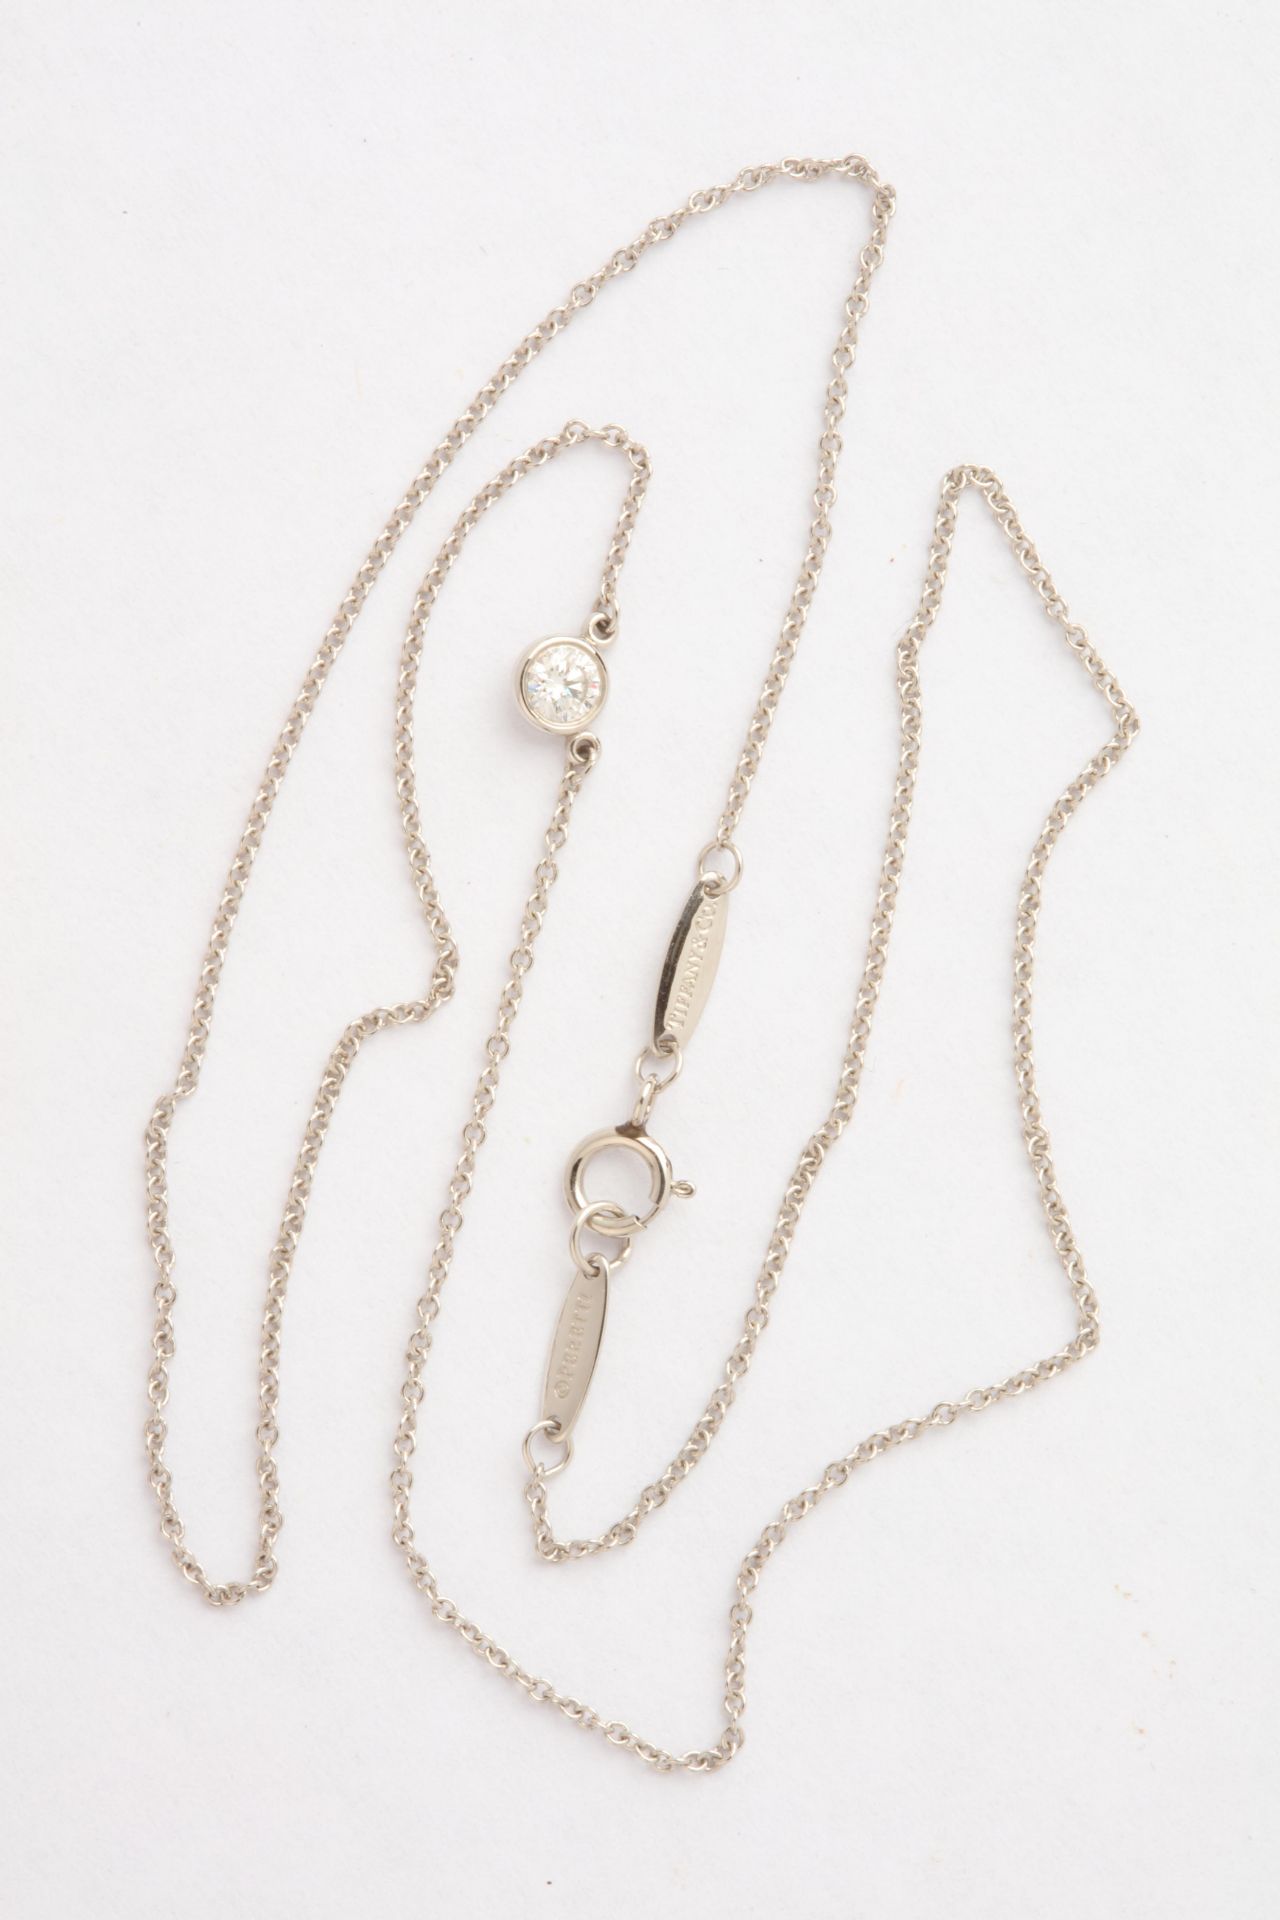 No VAT Tiffany & Co Elsa Peretti "Diamonds By The Yard" Single Diamond Necklace In Platinum - Image 2 of 3